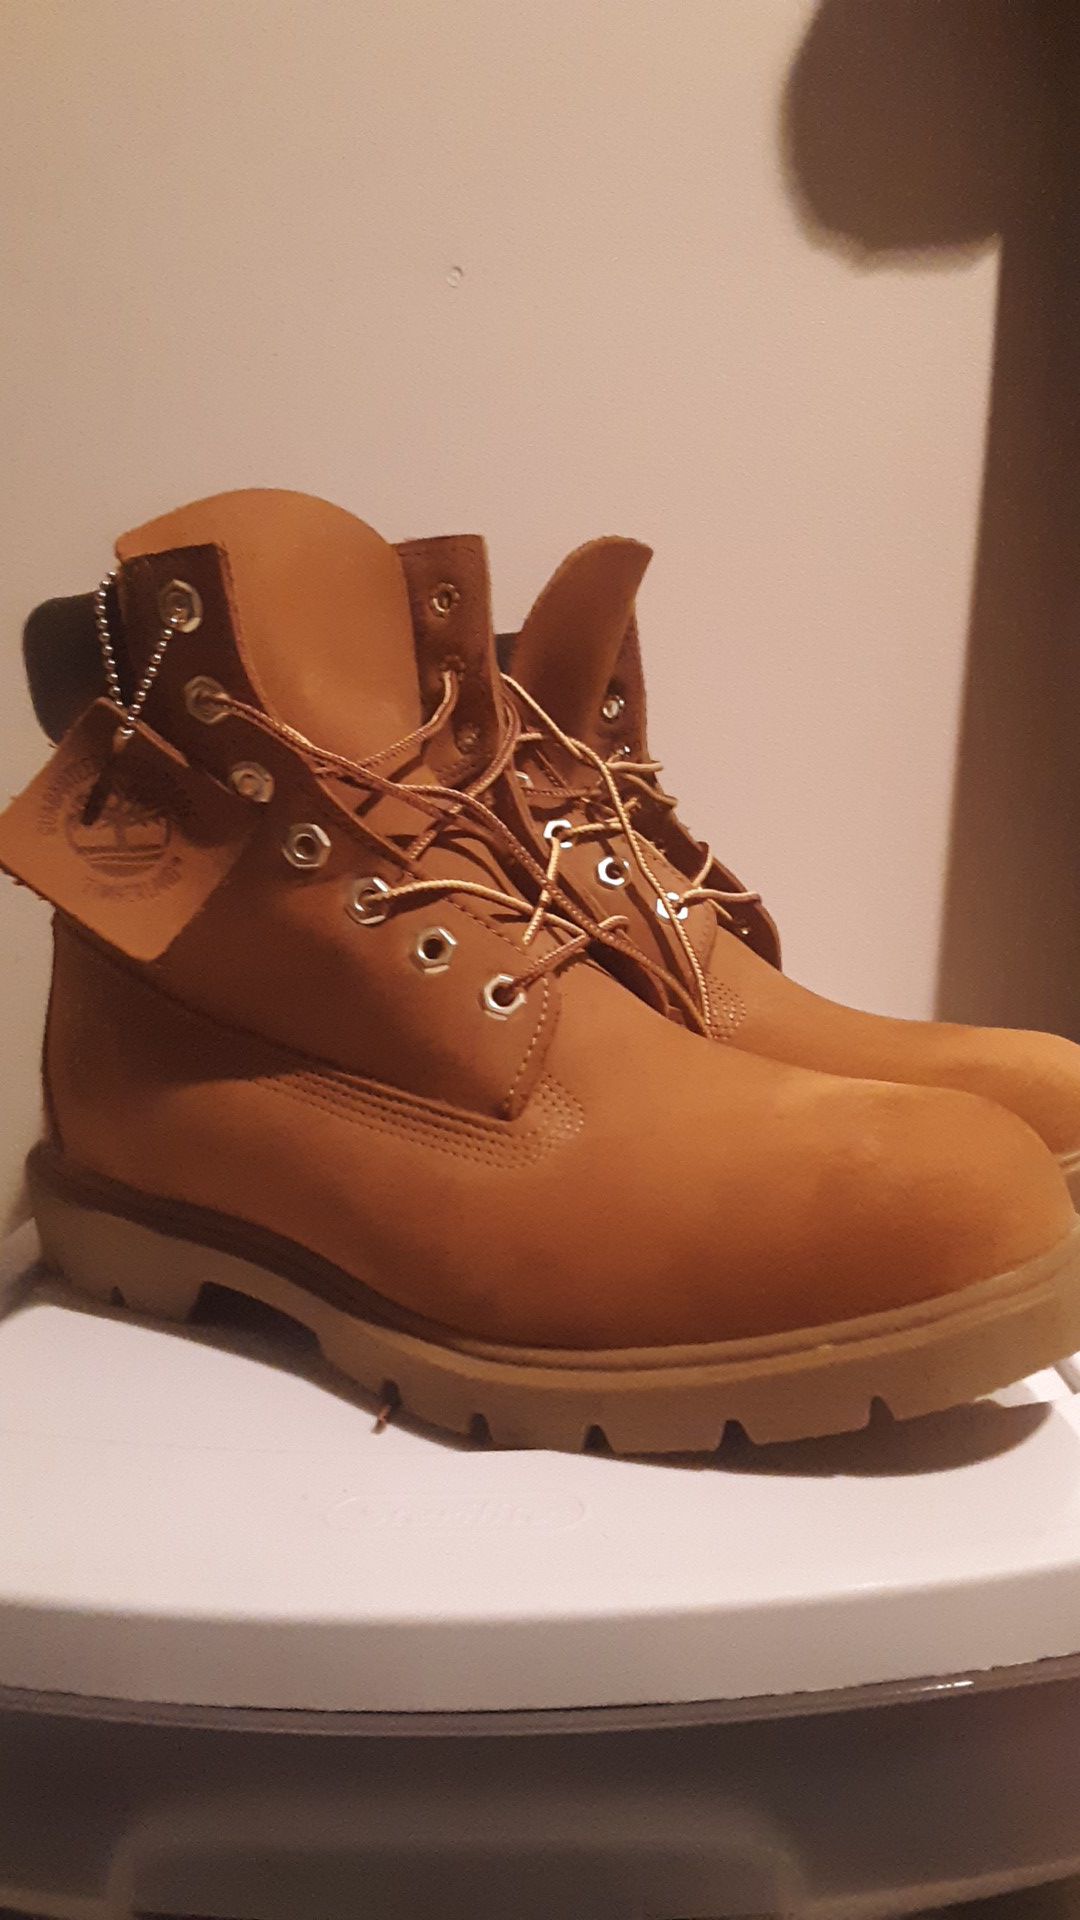 Timberland Boots 10.5